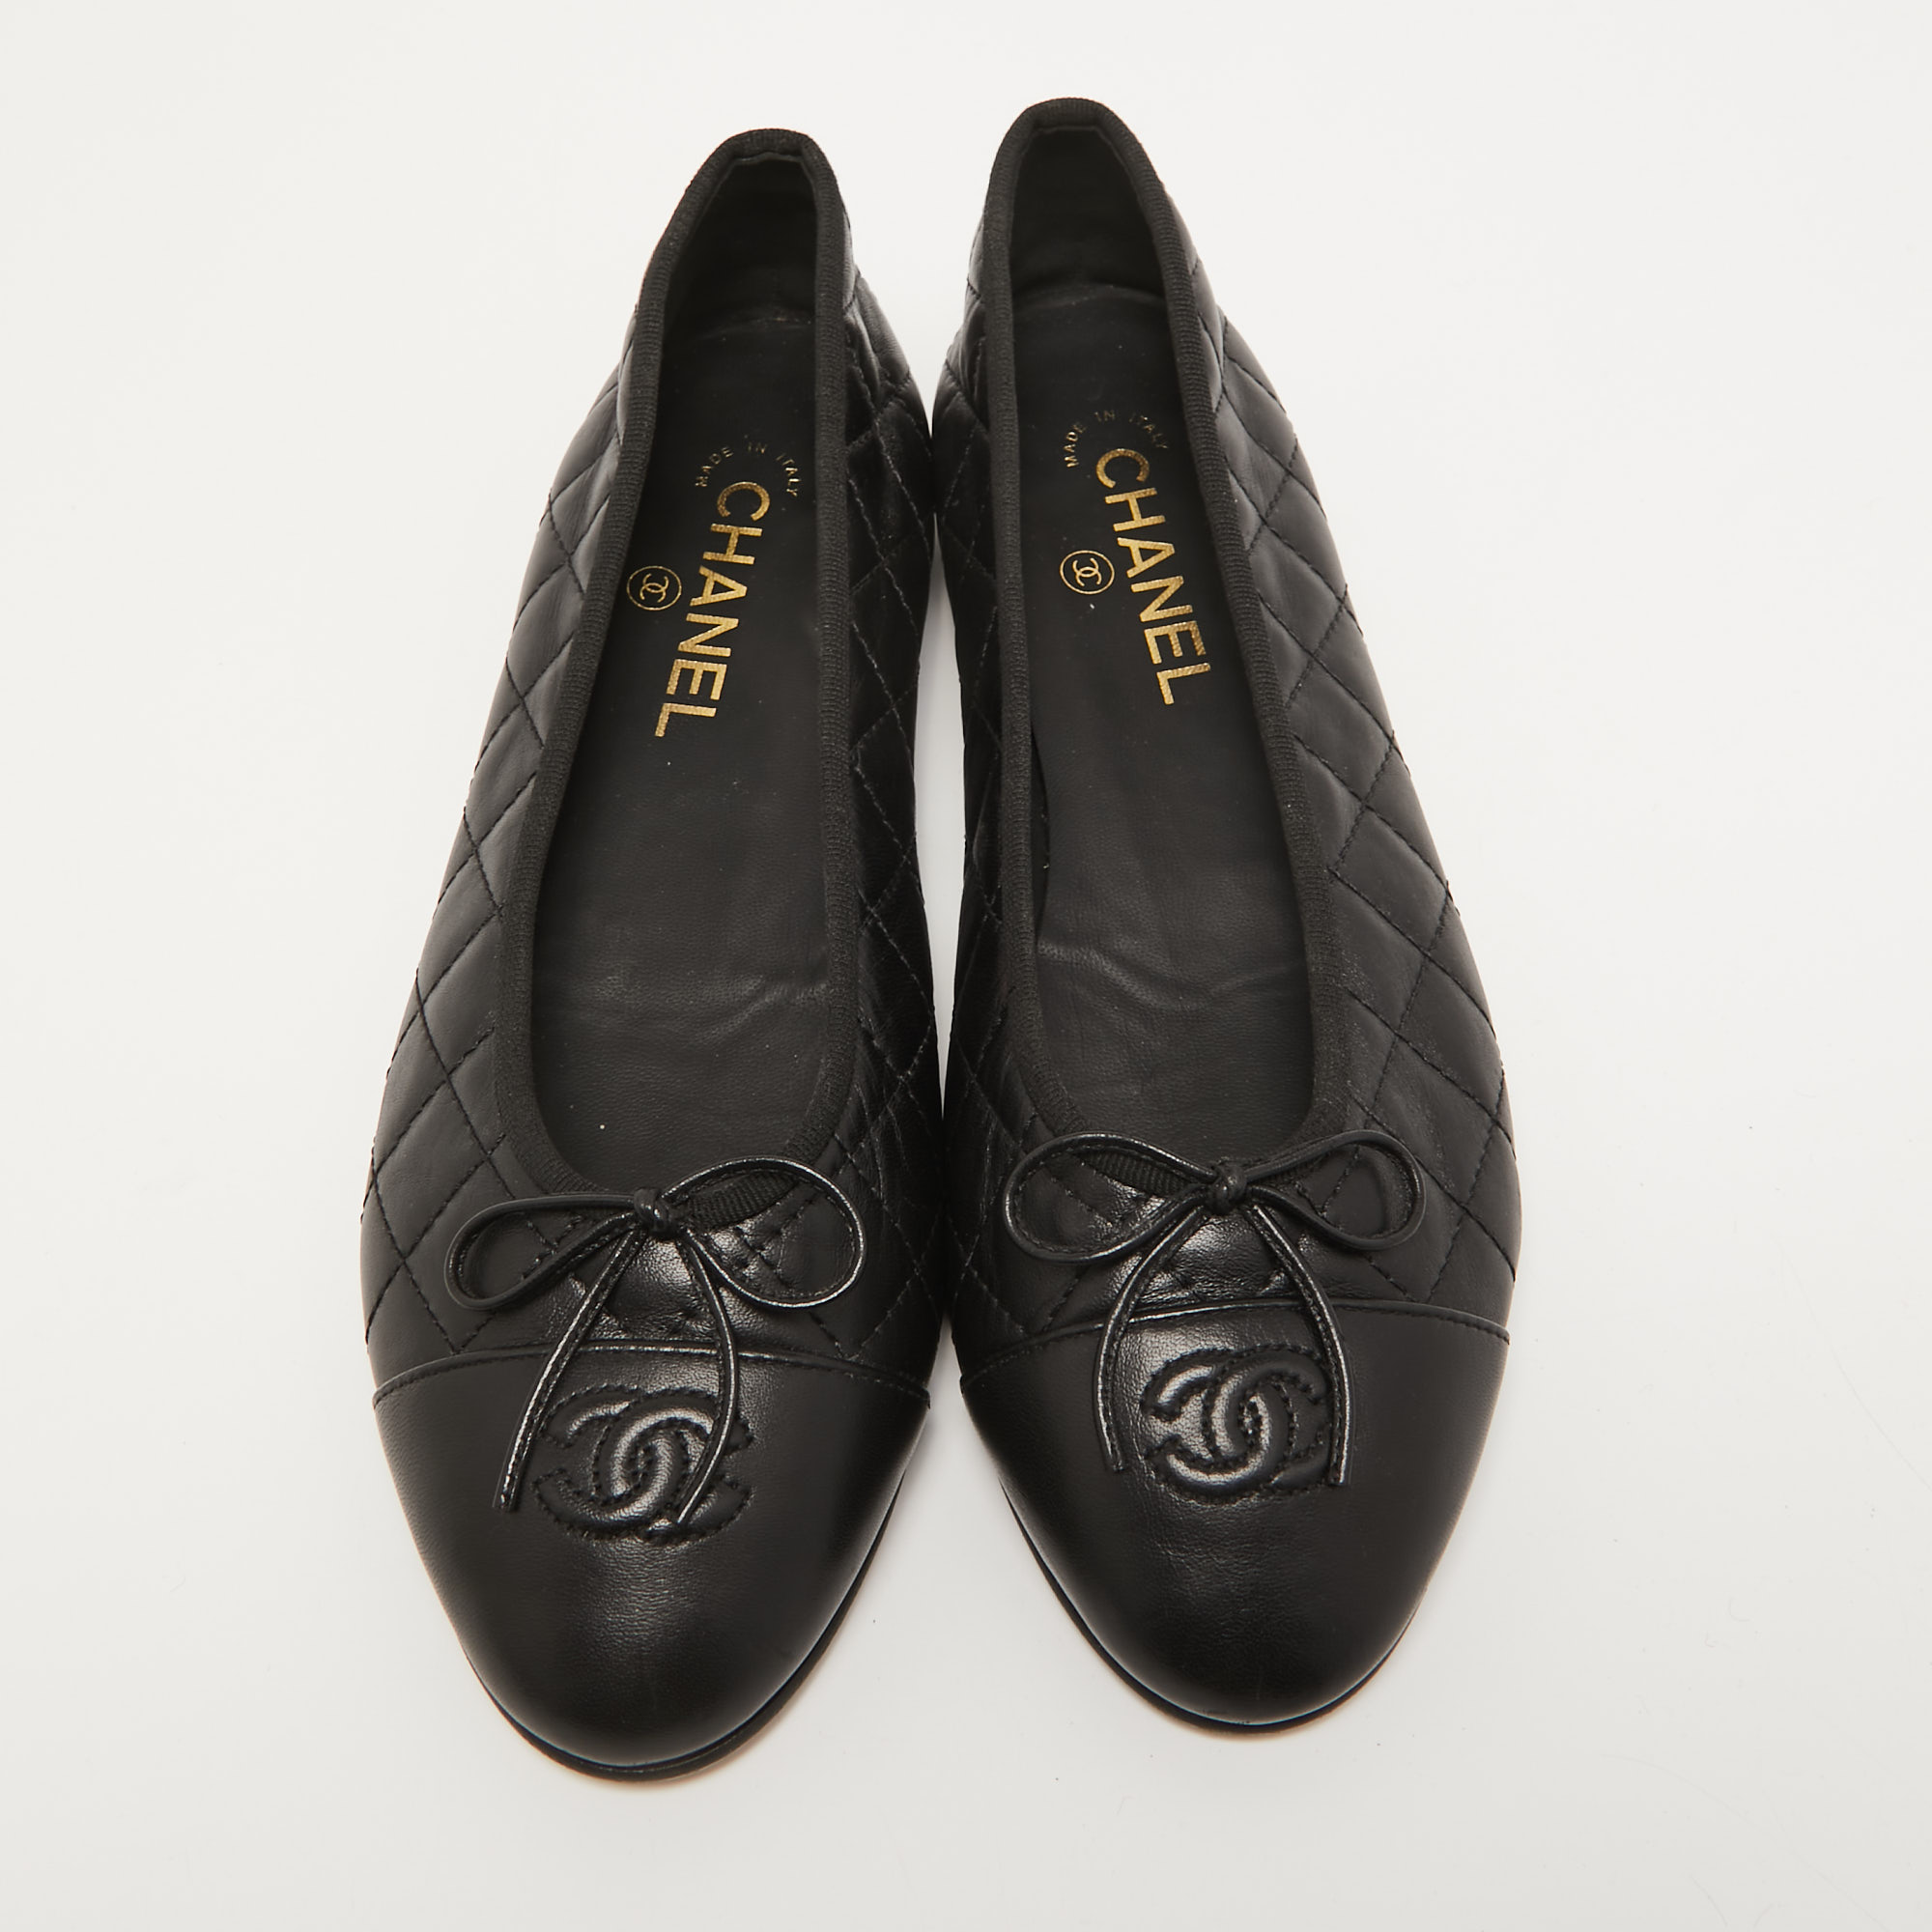 Chanel Black Leather CC Cap Toe Ballet Flats Size 40.5 Chanel